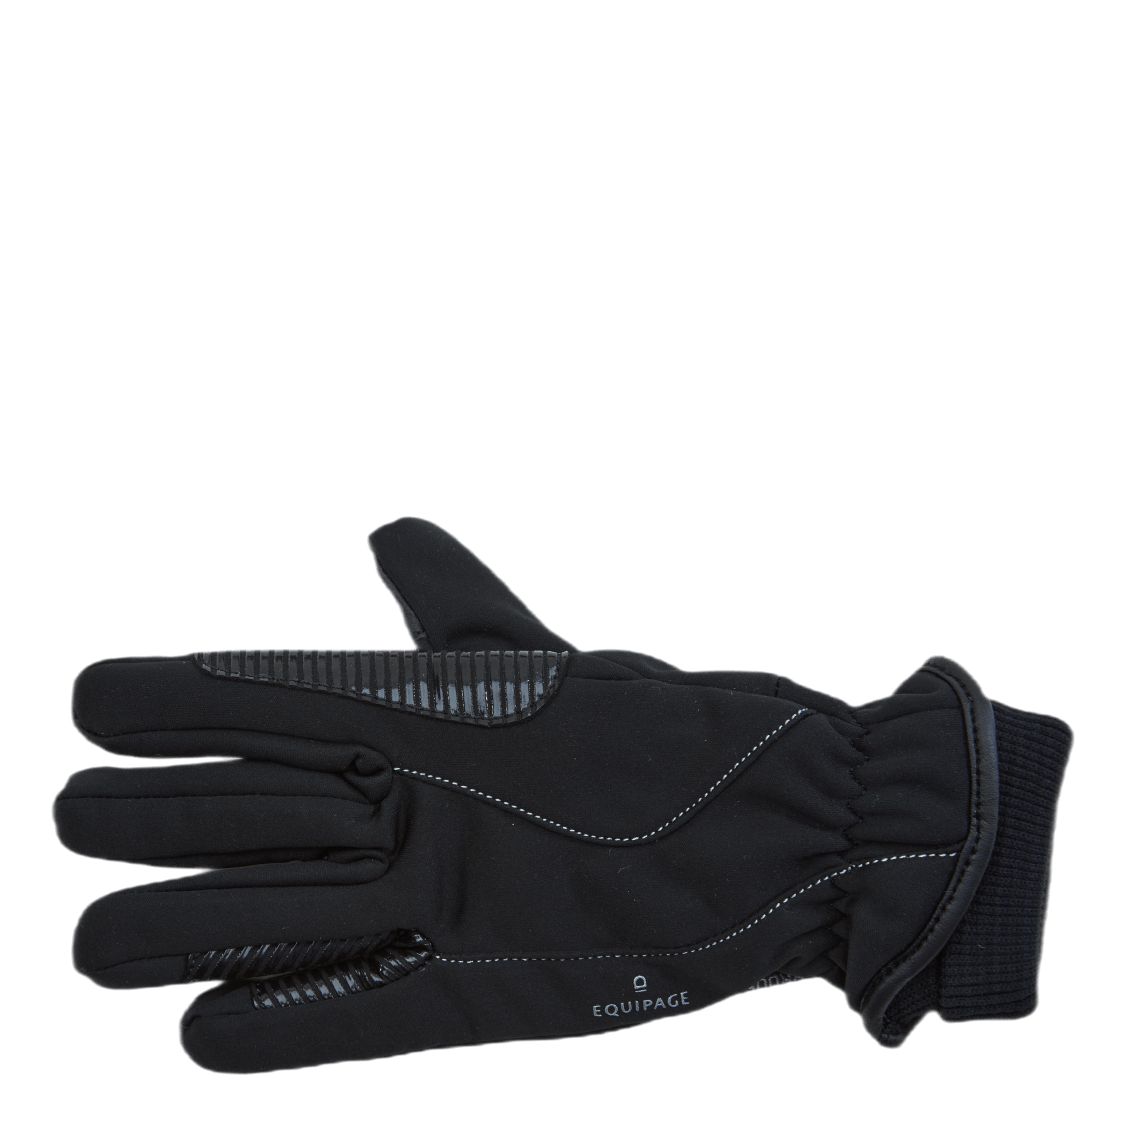 Evian Glove Black